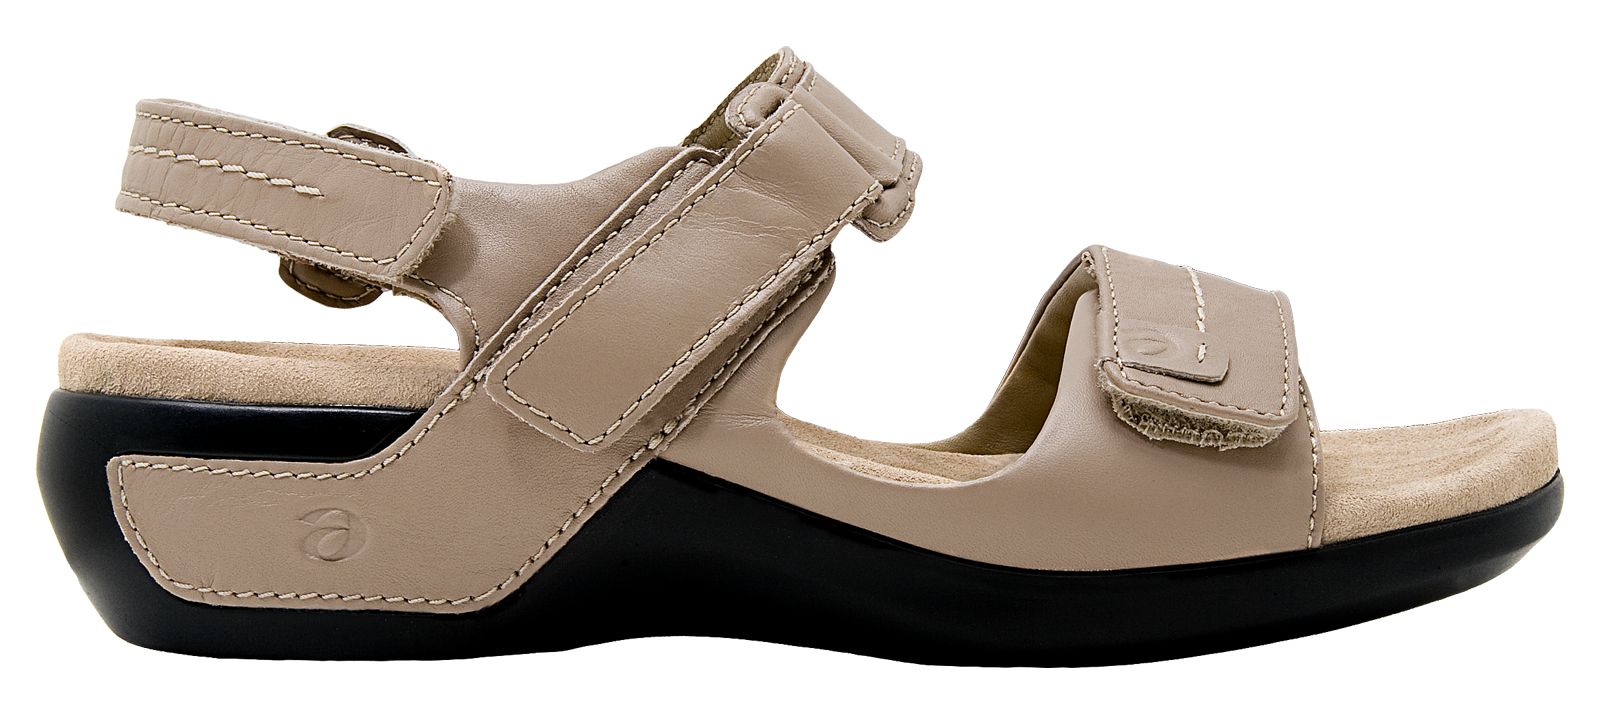 Aravon Shoes for Women - Aravon by New Balance